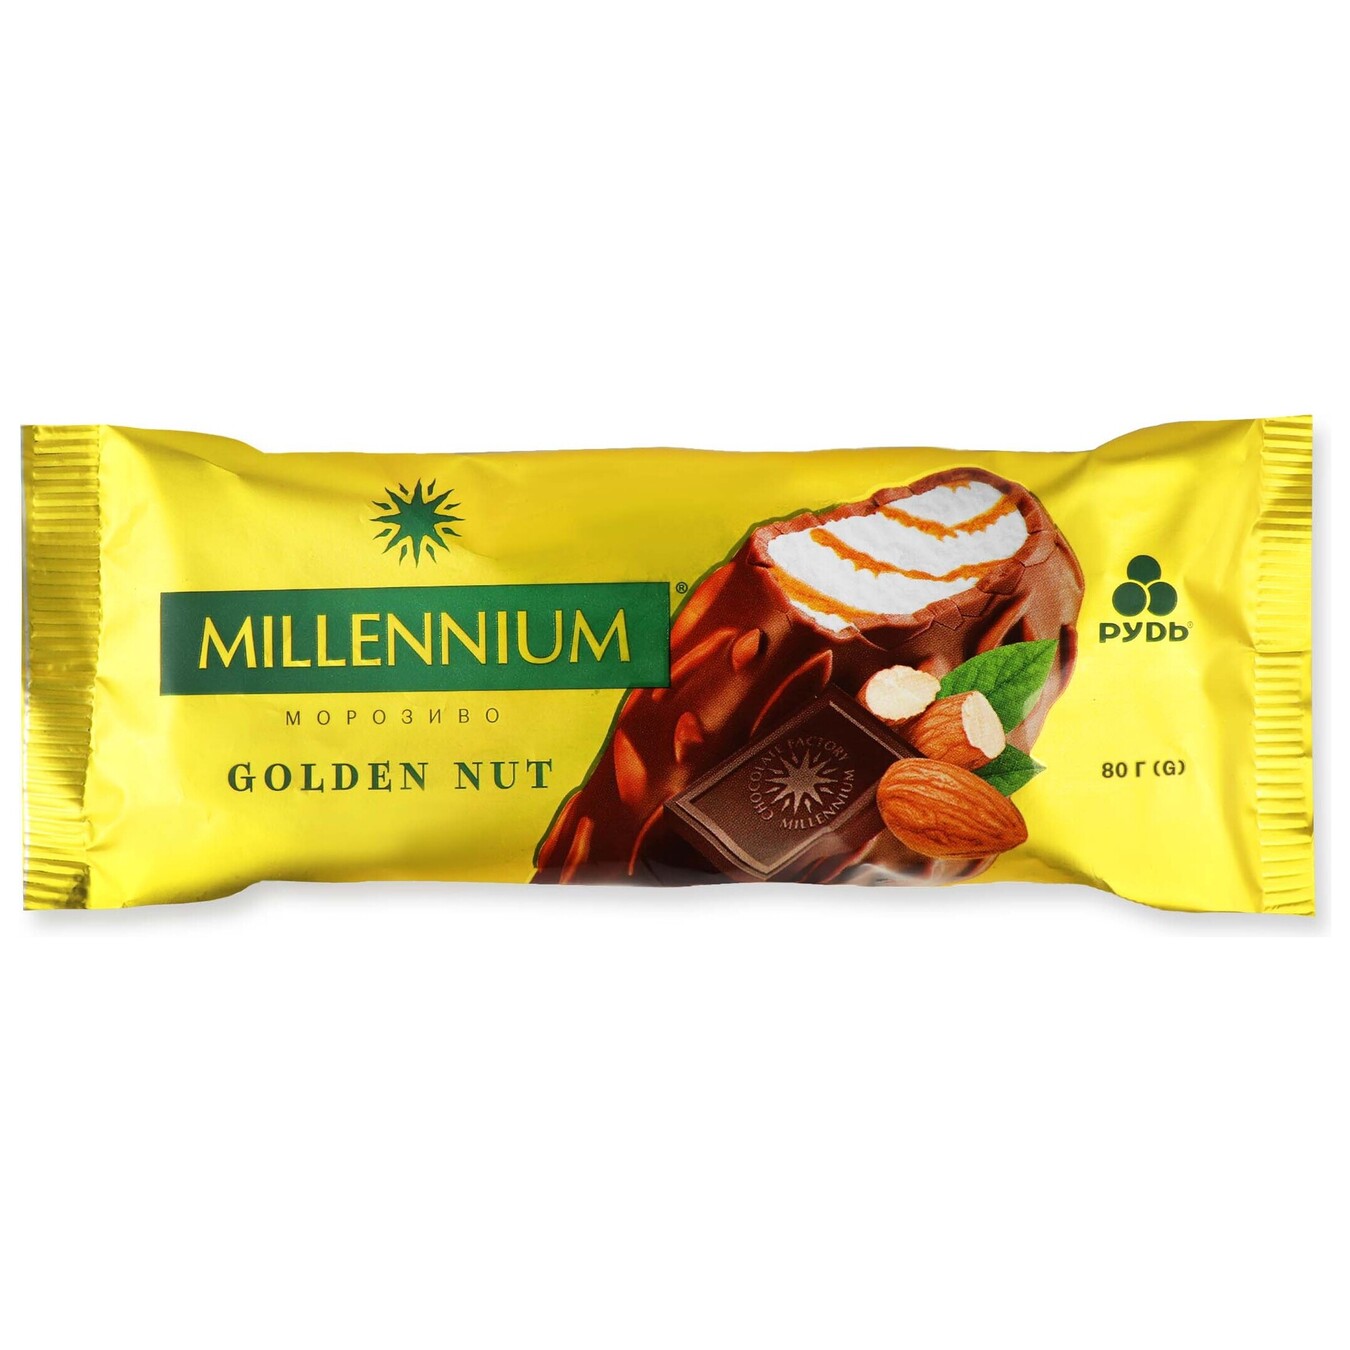 Millennium Golden Nut ice cream 80g